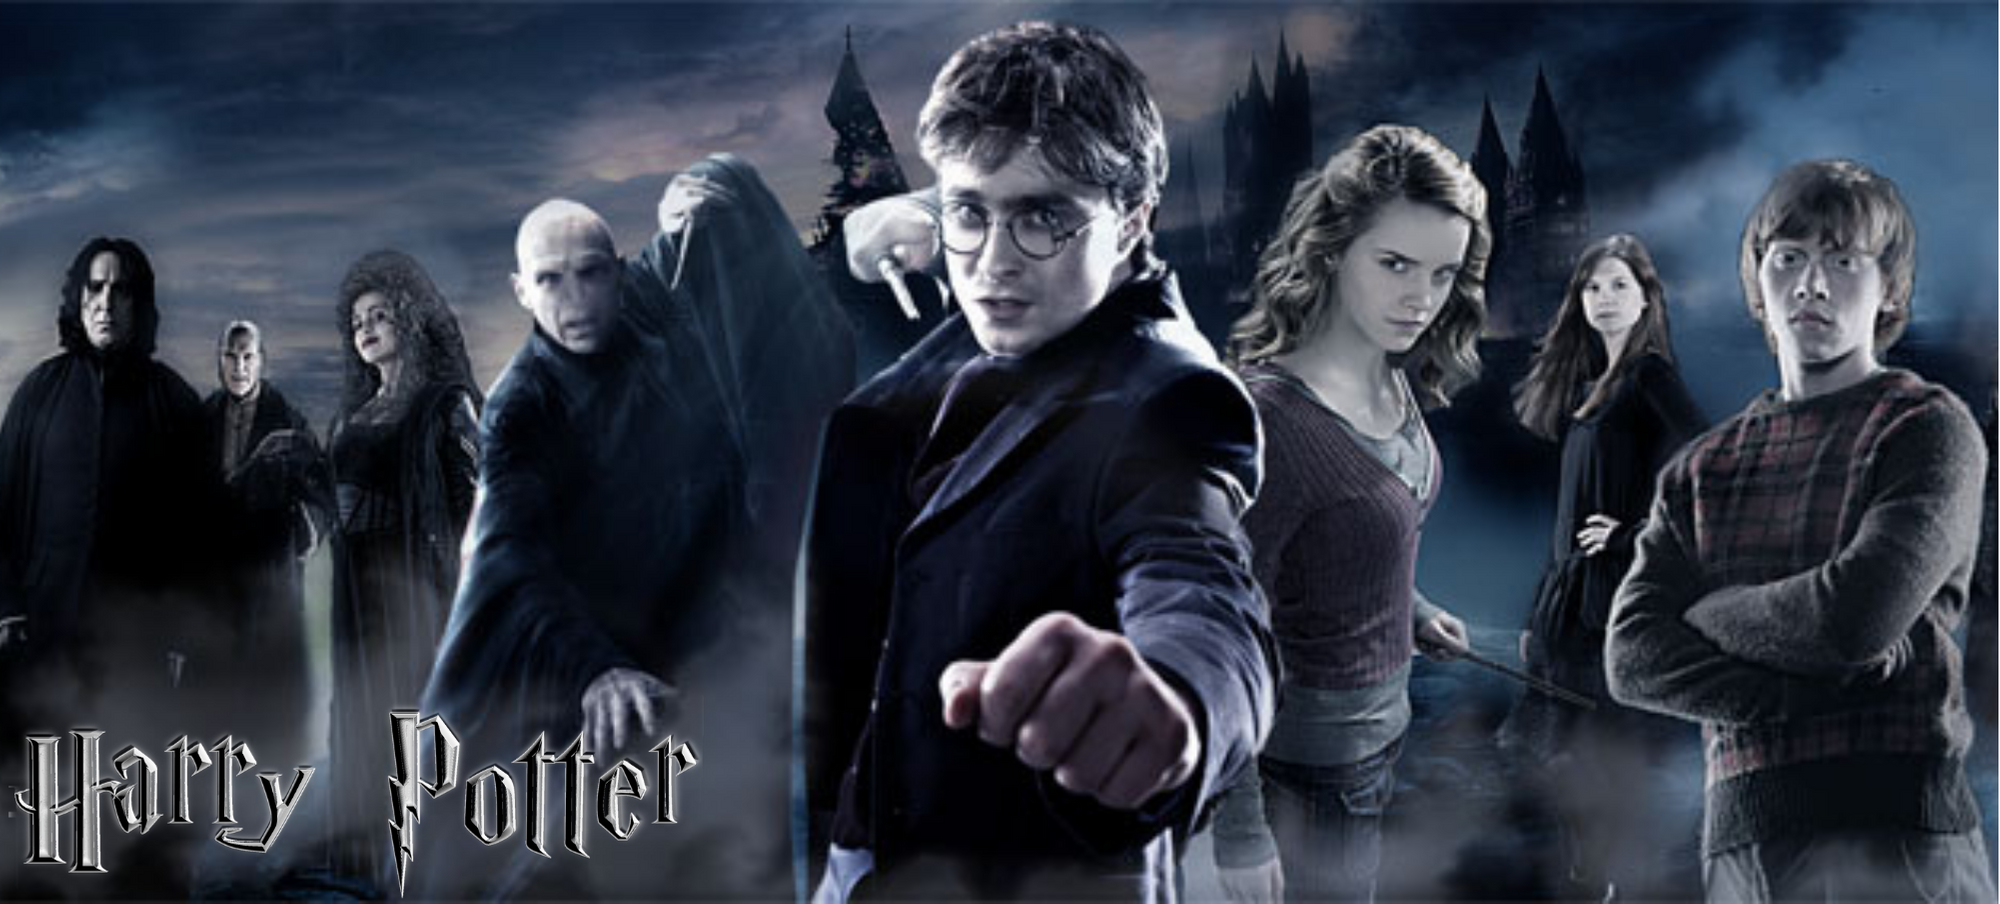 Saga Harry Potter - image 1.png